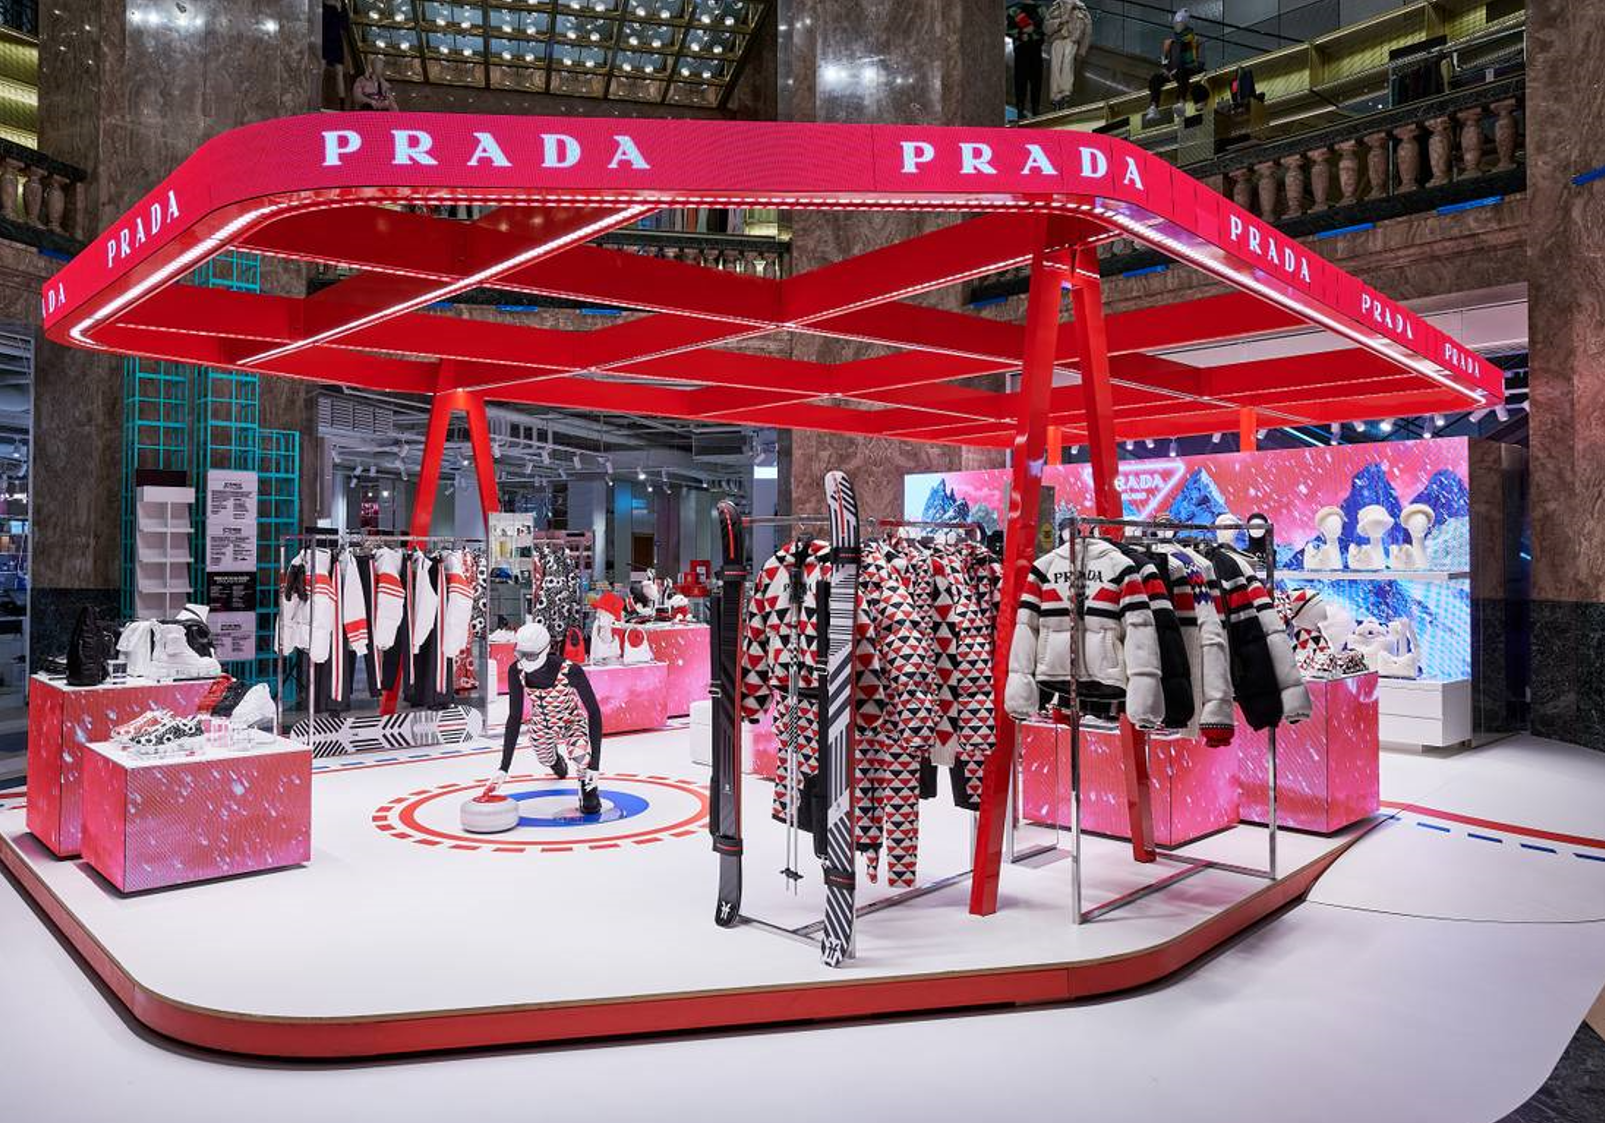 PRADA opens new pop-up store in Paris at Galeries Lafayette #Prada  #PradaHyperLeaves #popup #Paris #GaleriesLafayette #luxury…